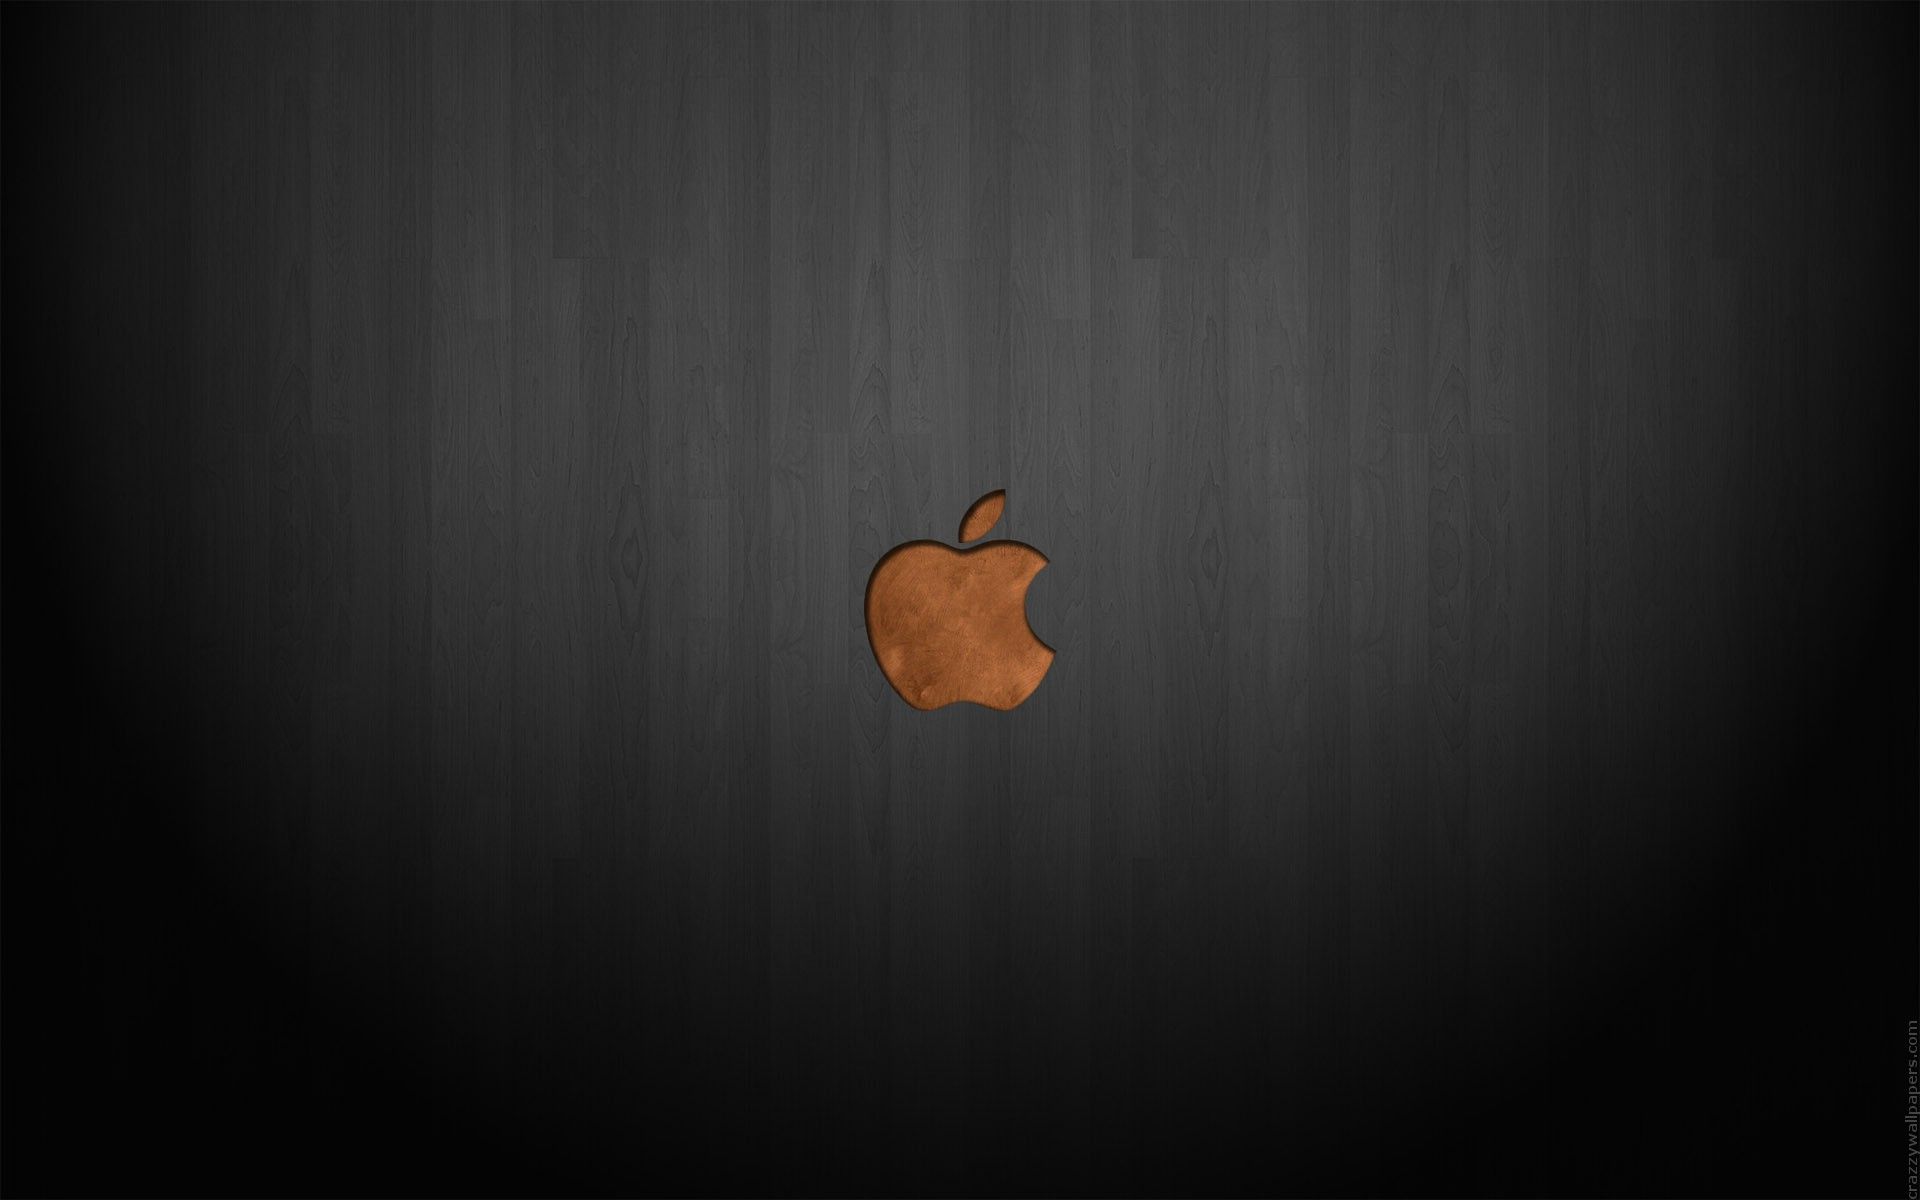 Apple Images Wallpaper - Desktop Backgrounds